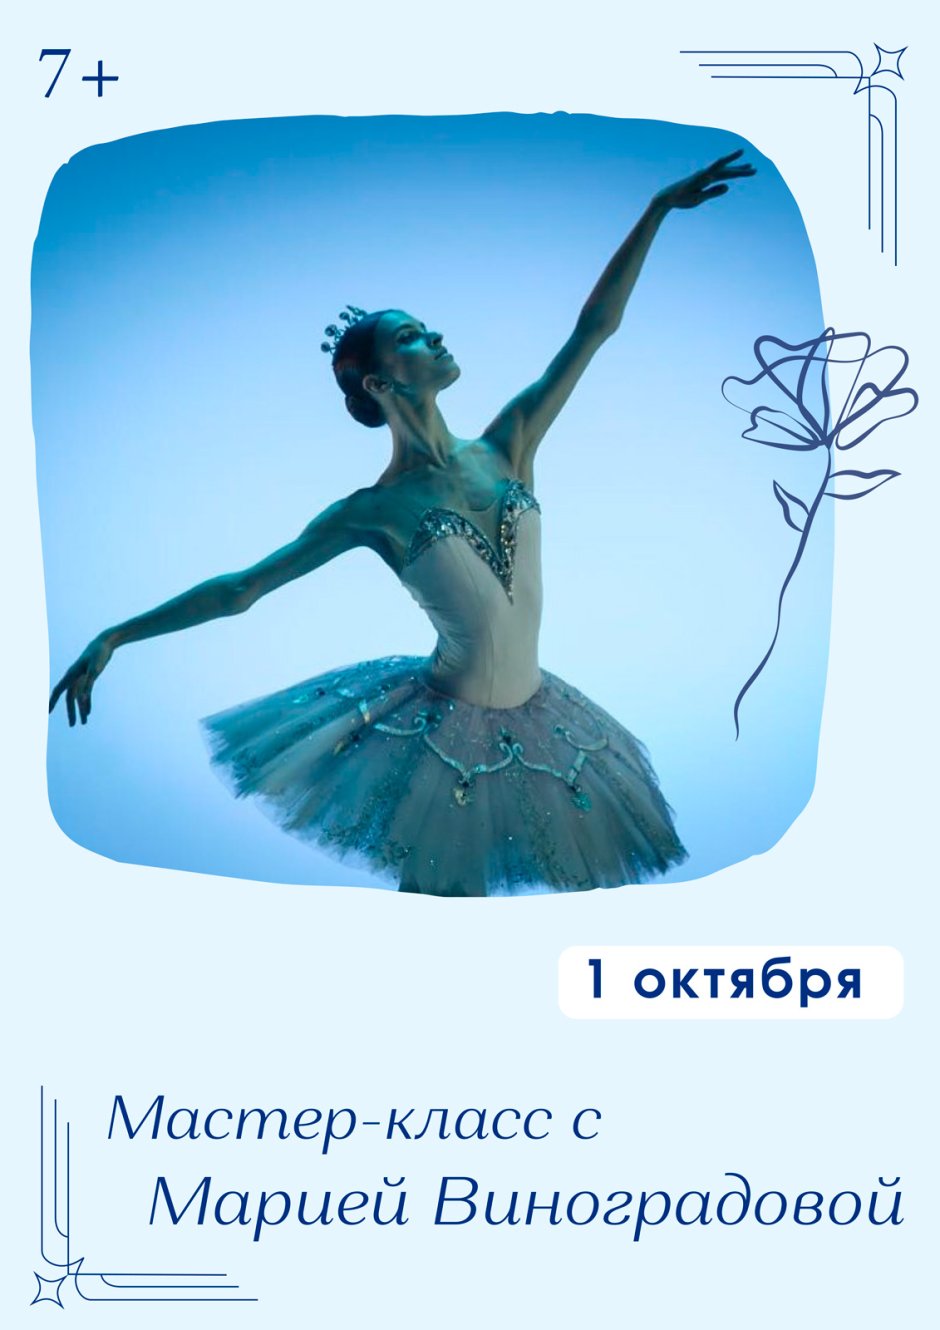 Международный день балета